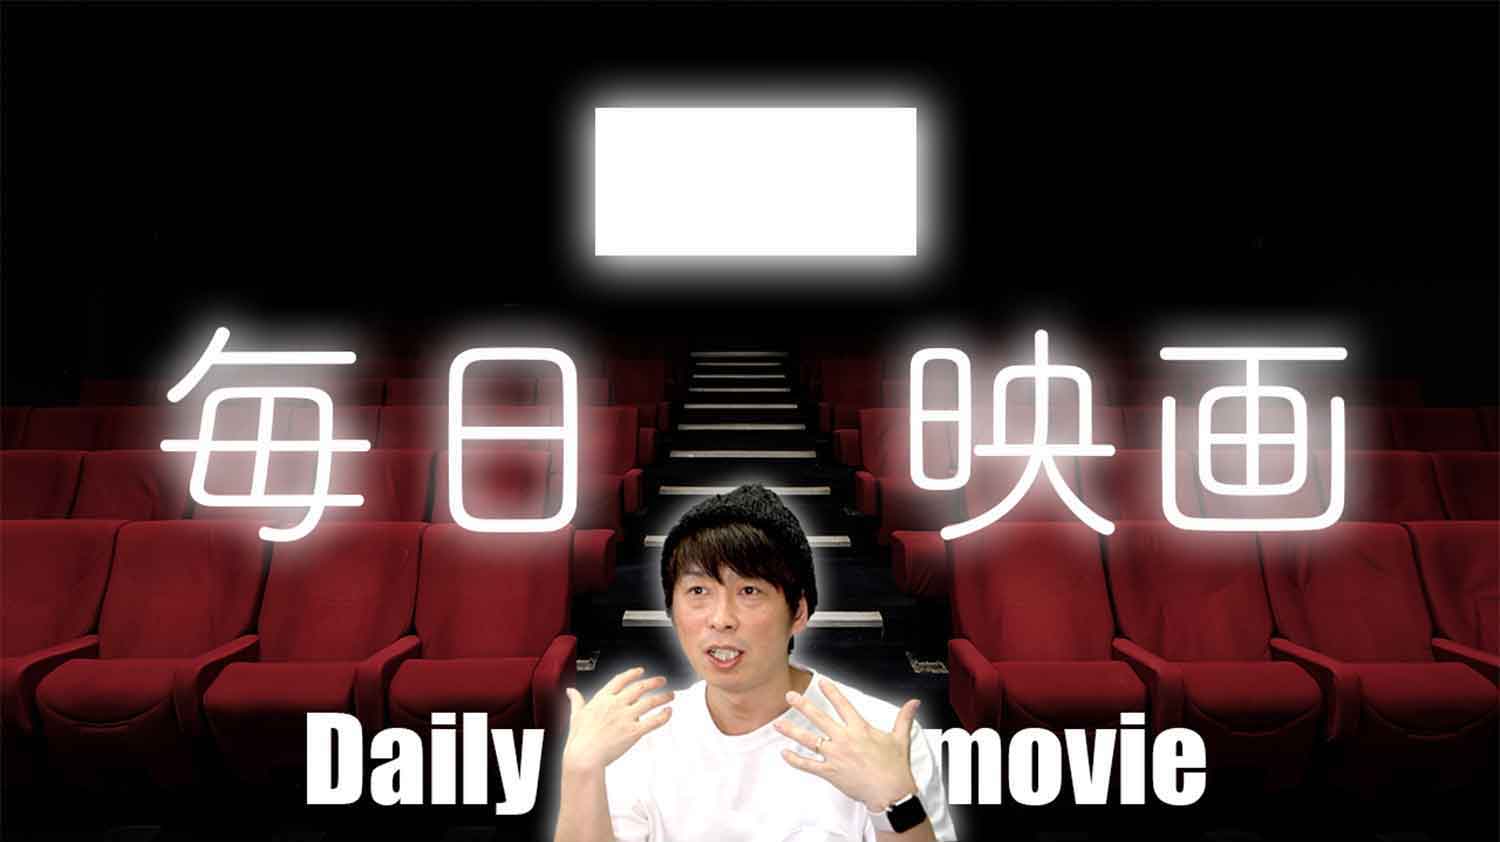 daily-routine-movies